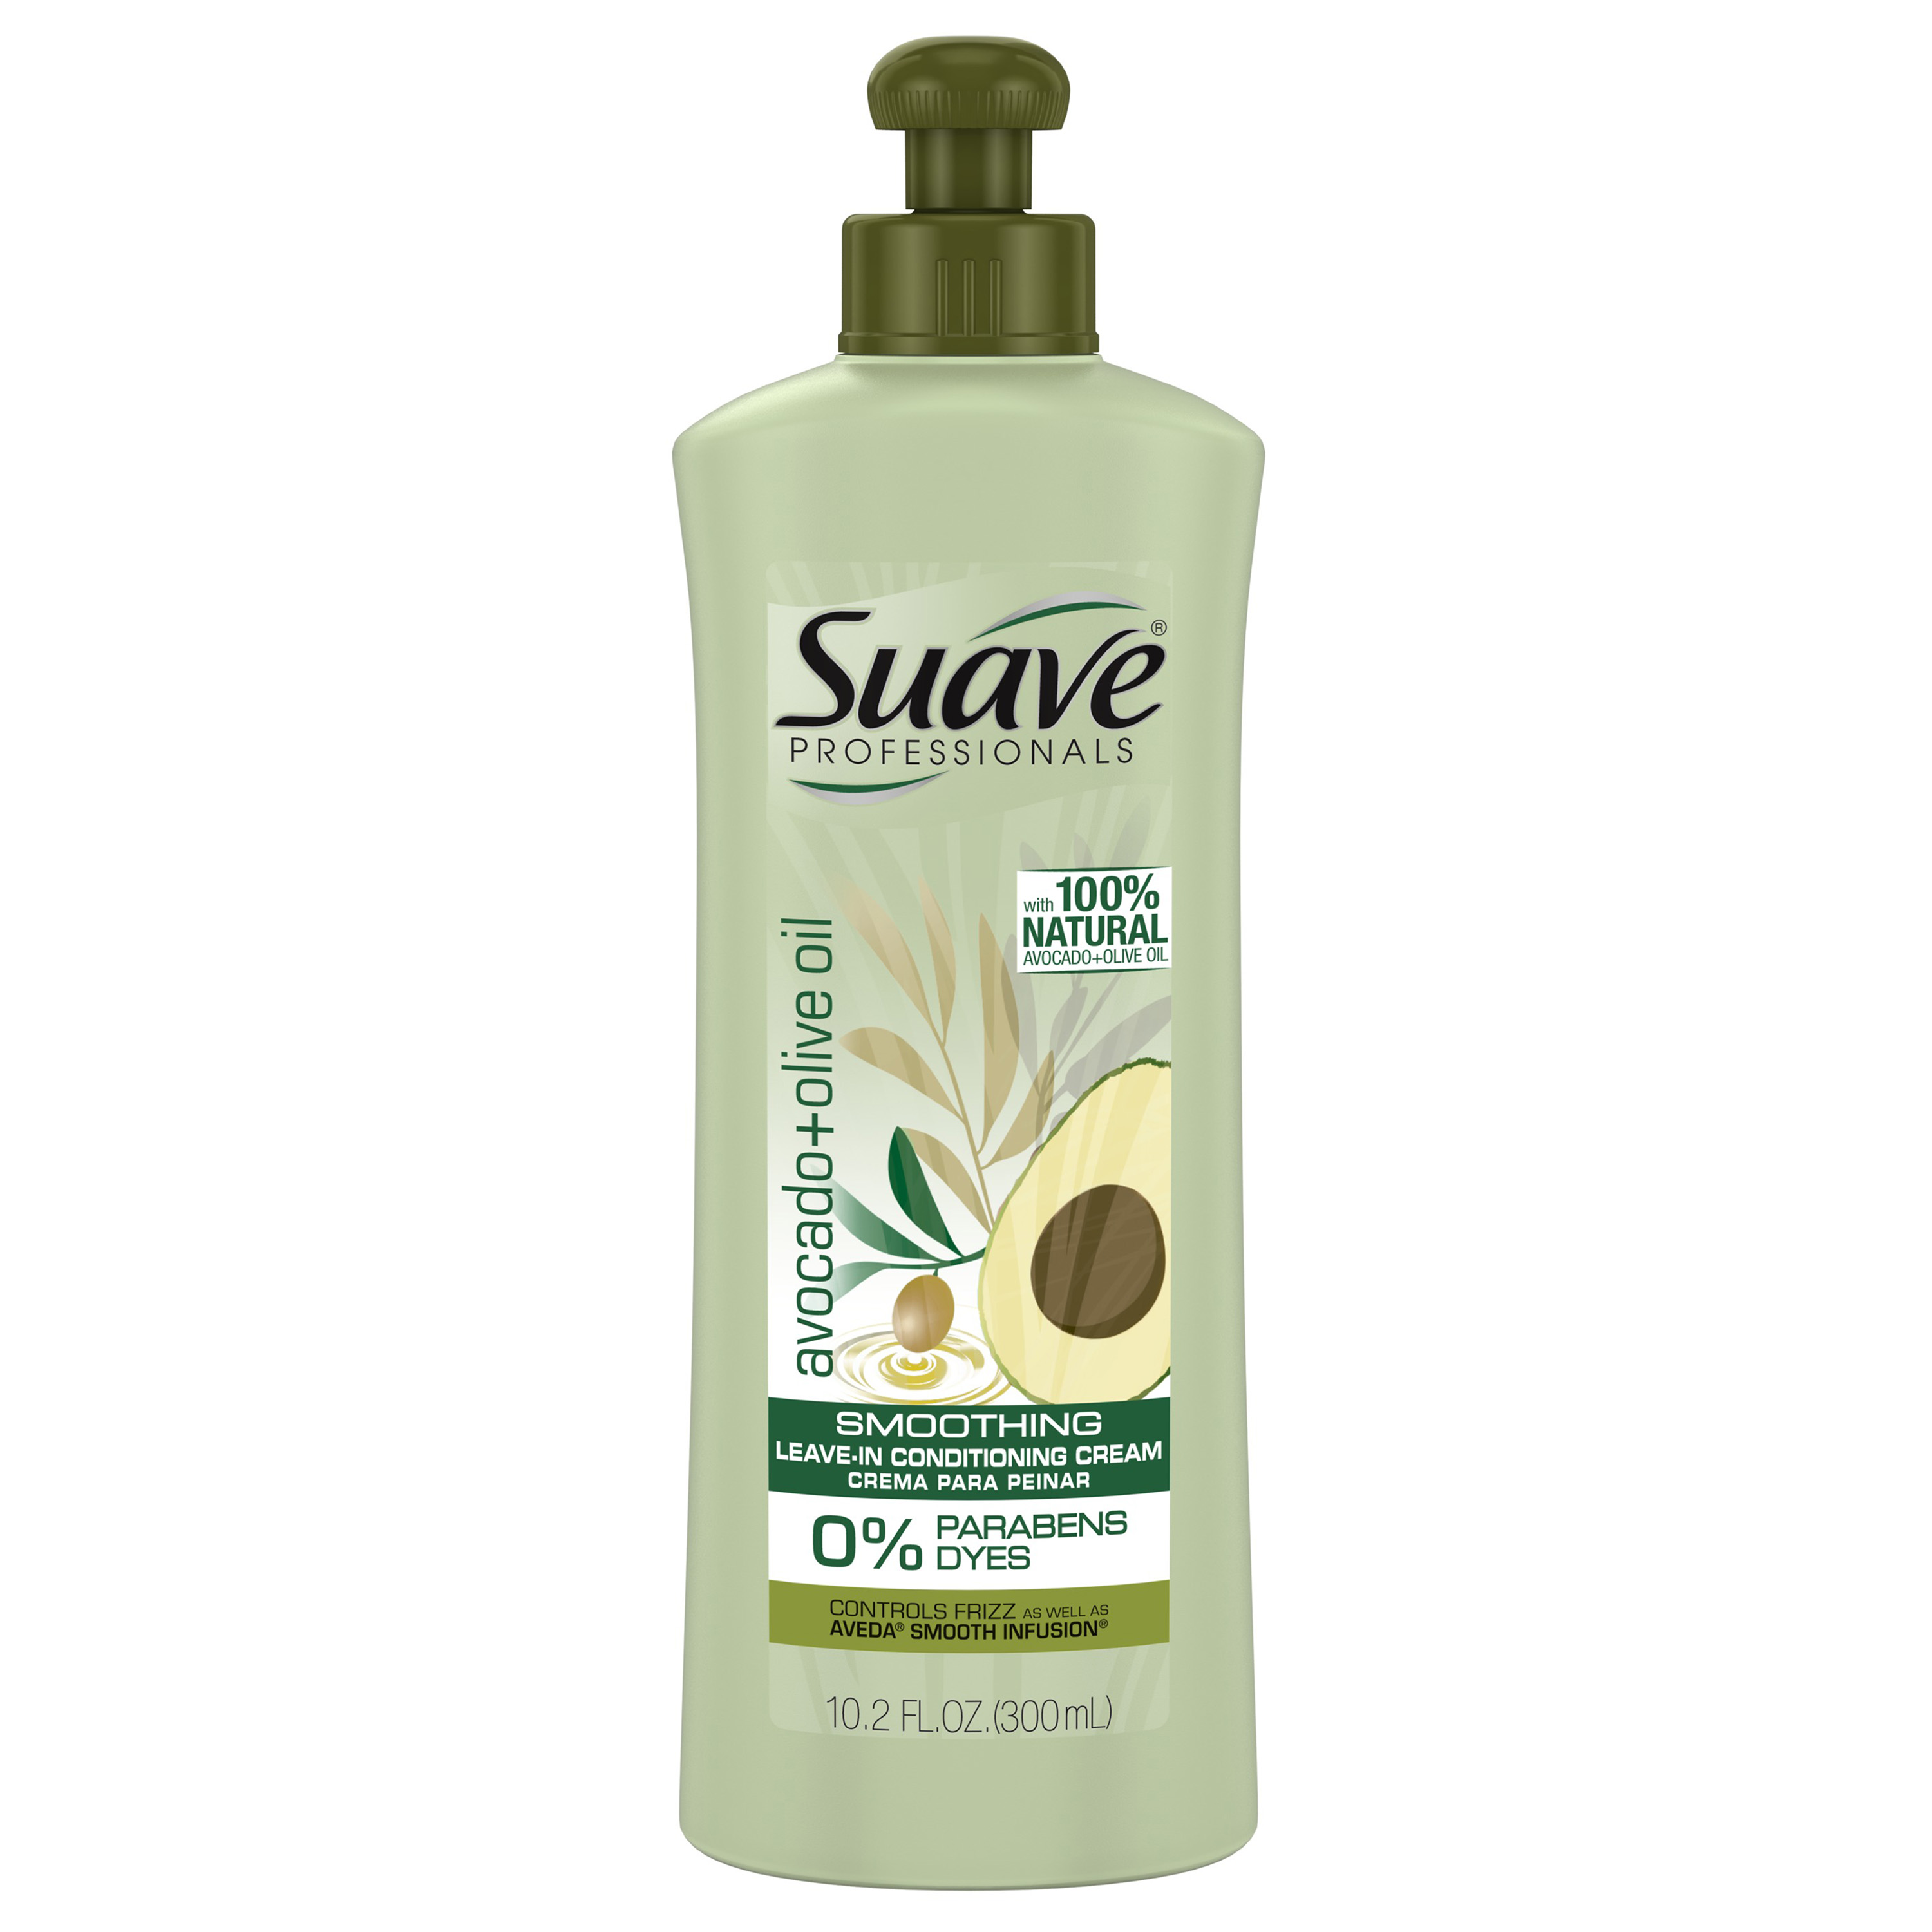 Suave Professionals Avocado + Olive Oil Leave-in Conditioner, 10.2 oz - image 1 of 10